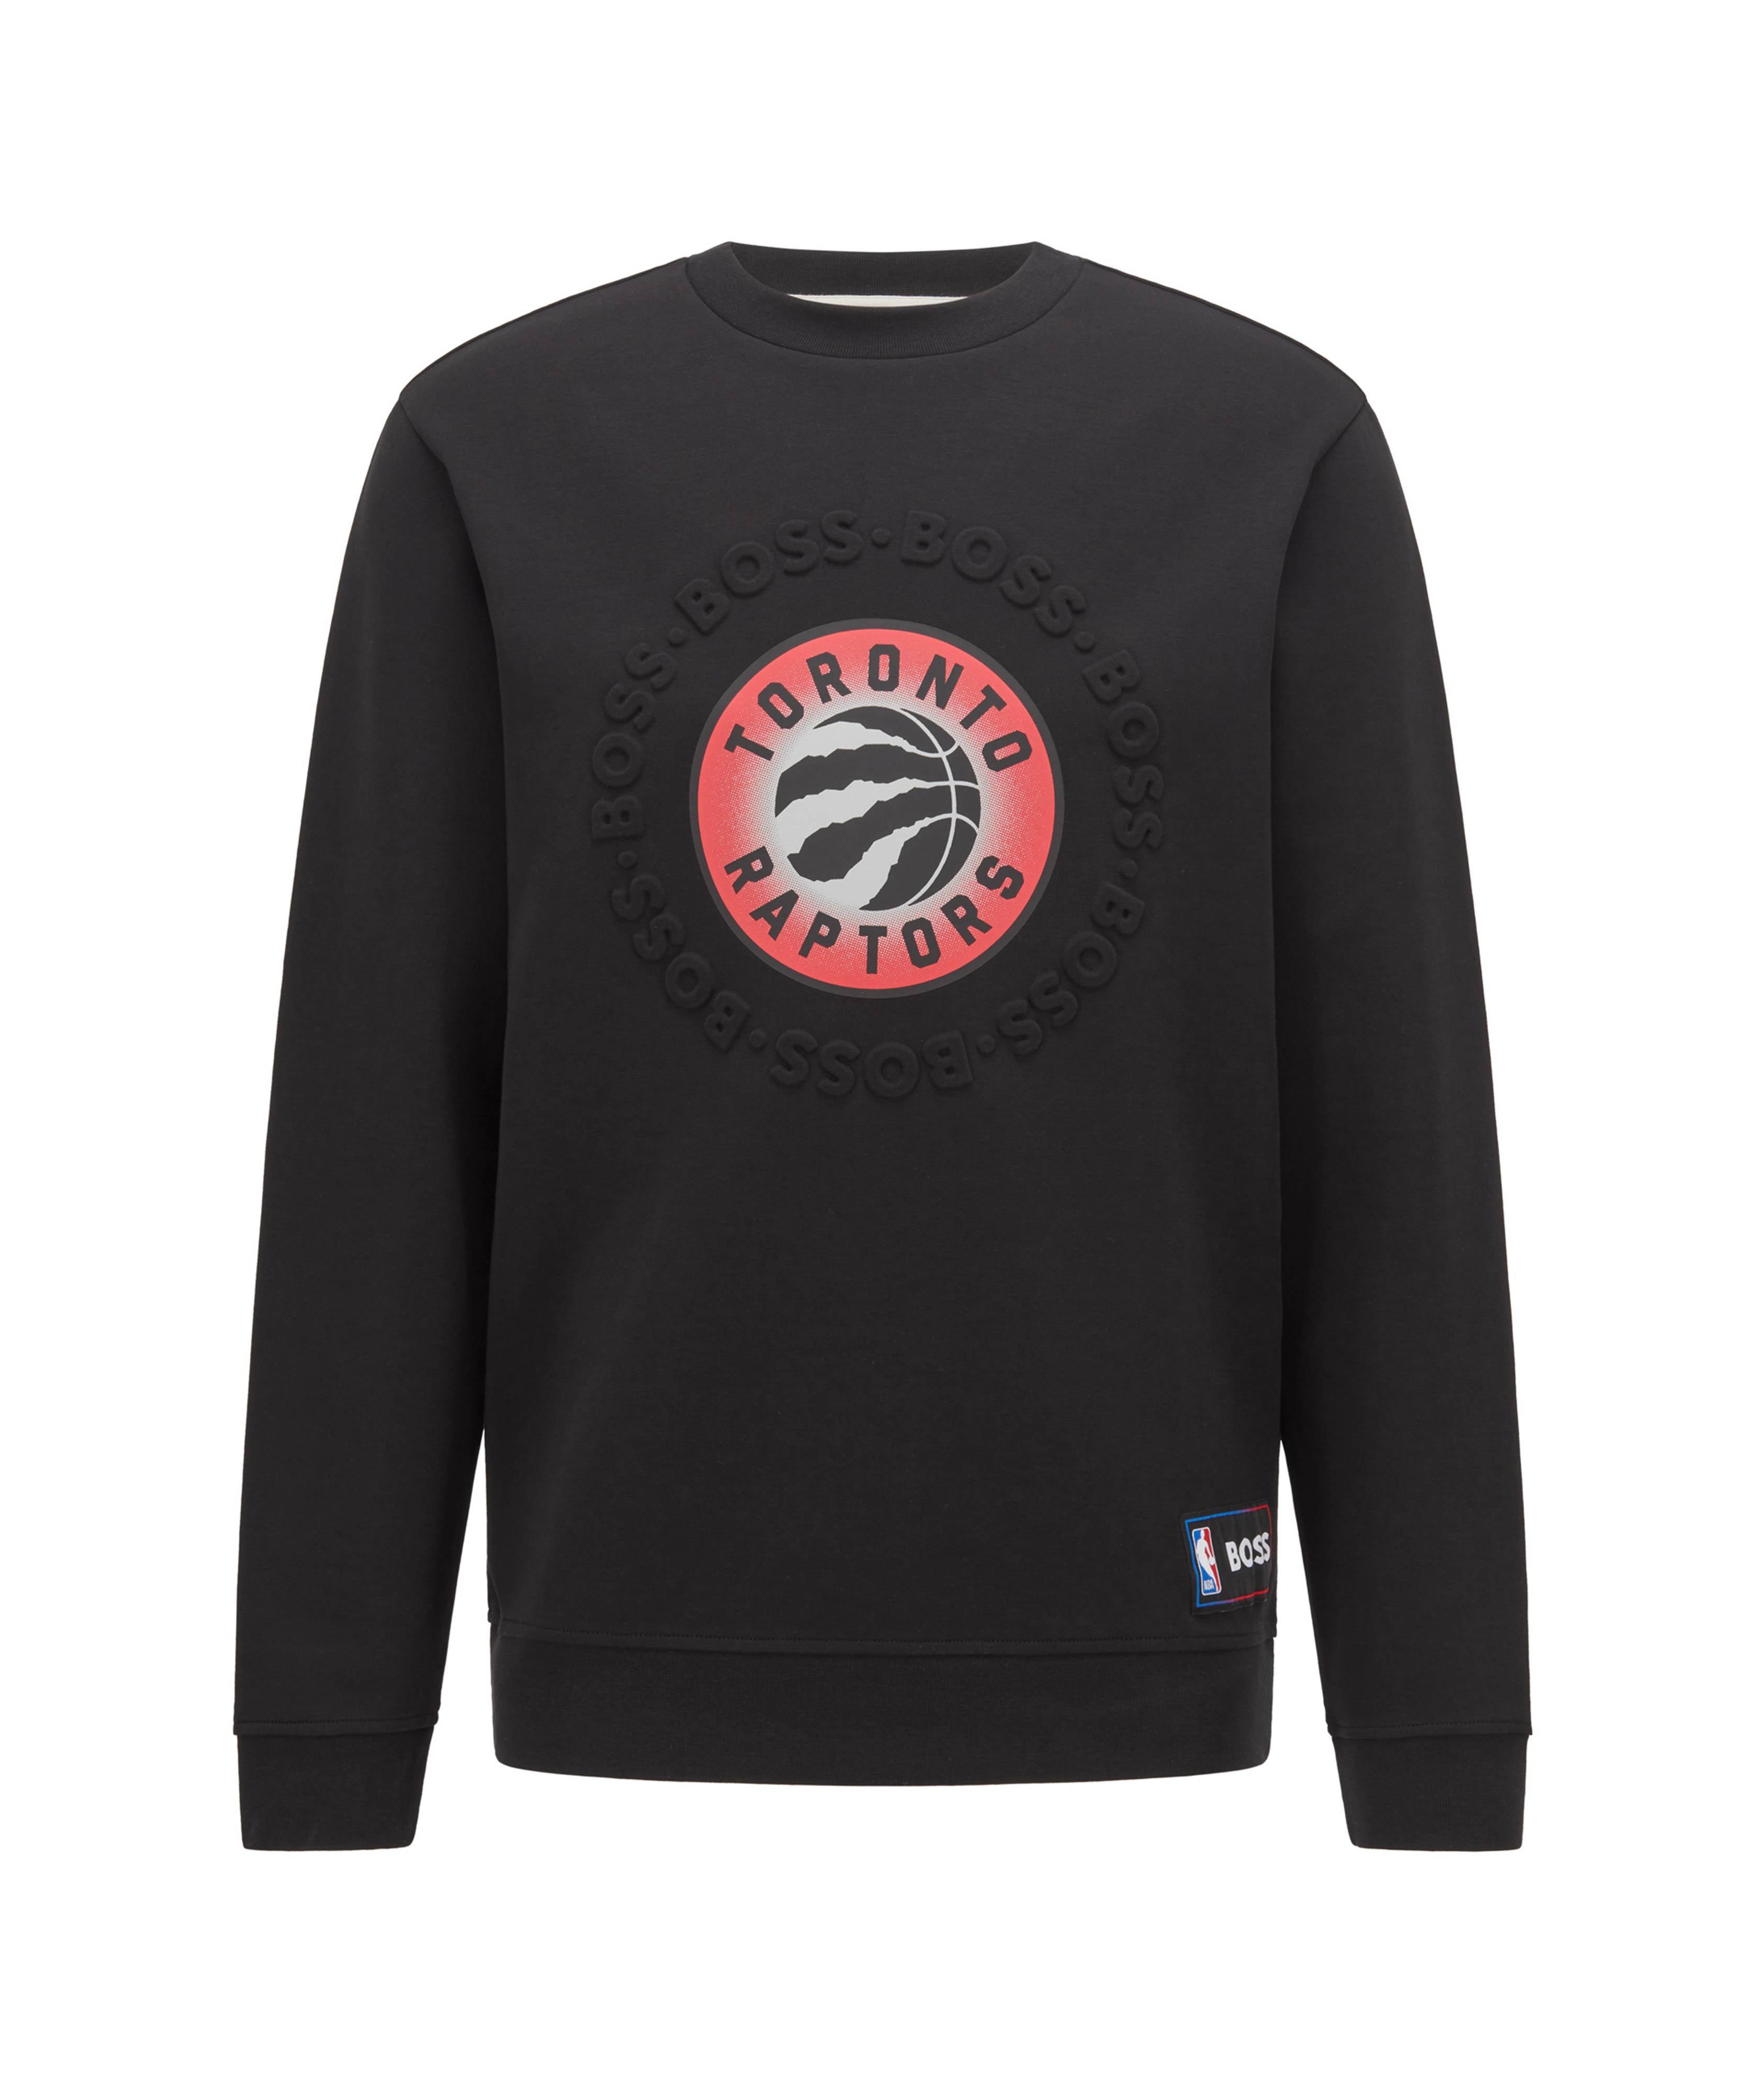 Pull avec logo des Raptors, collection NBA image 0